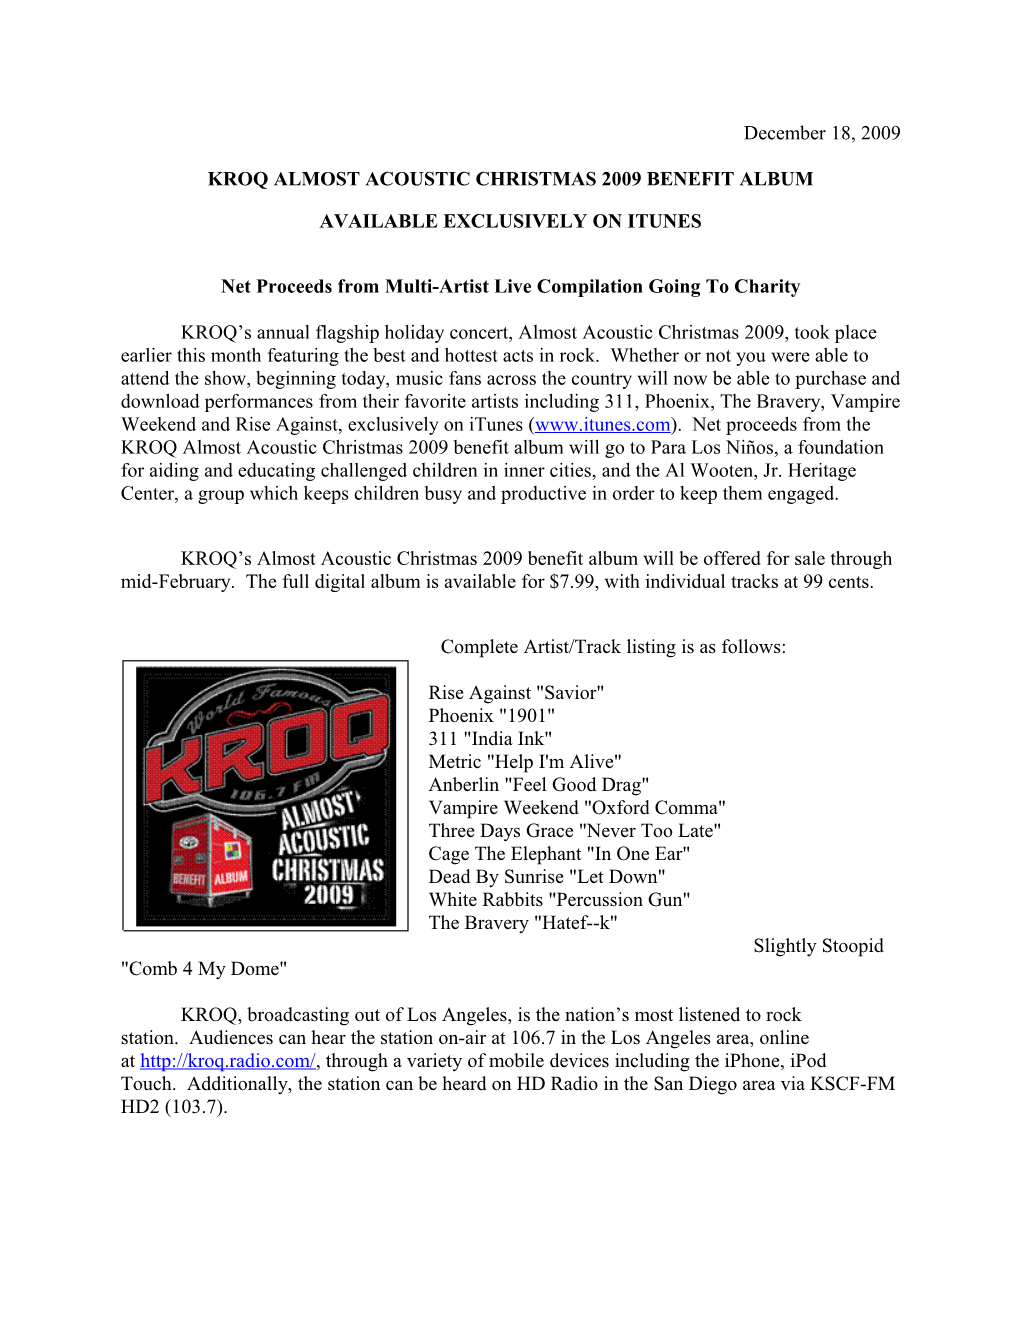 Kroq Almost Acoustic Christmas 2009 Benefit Album